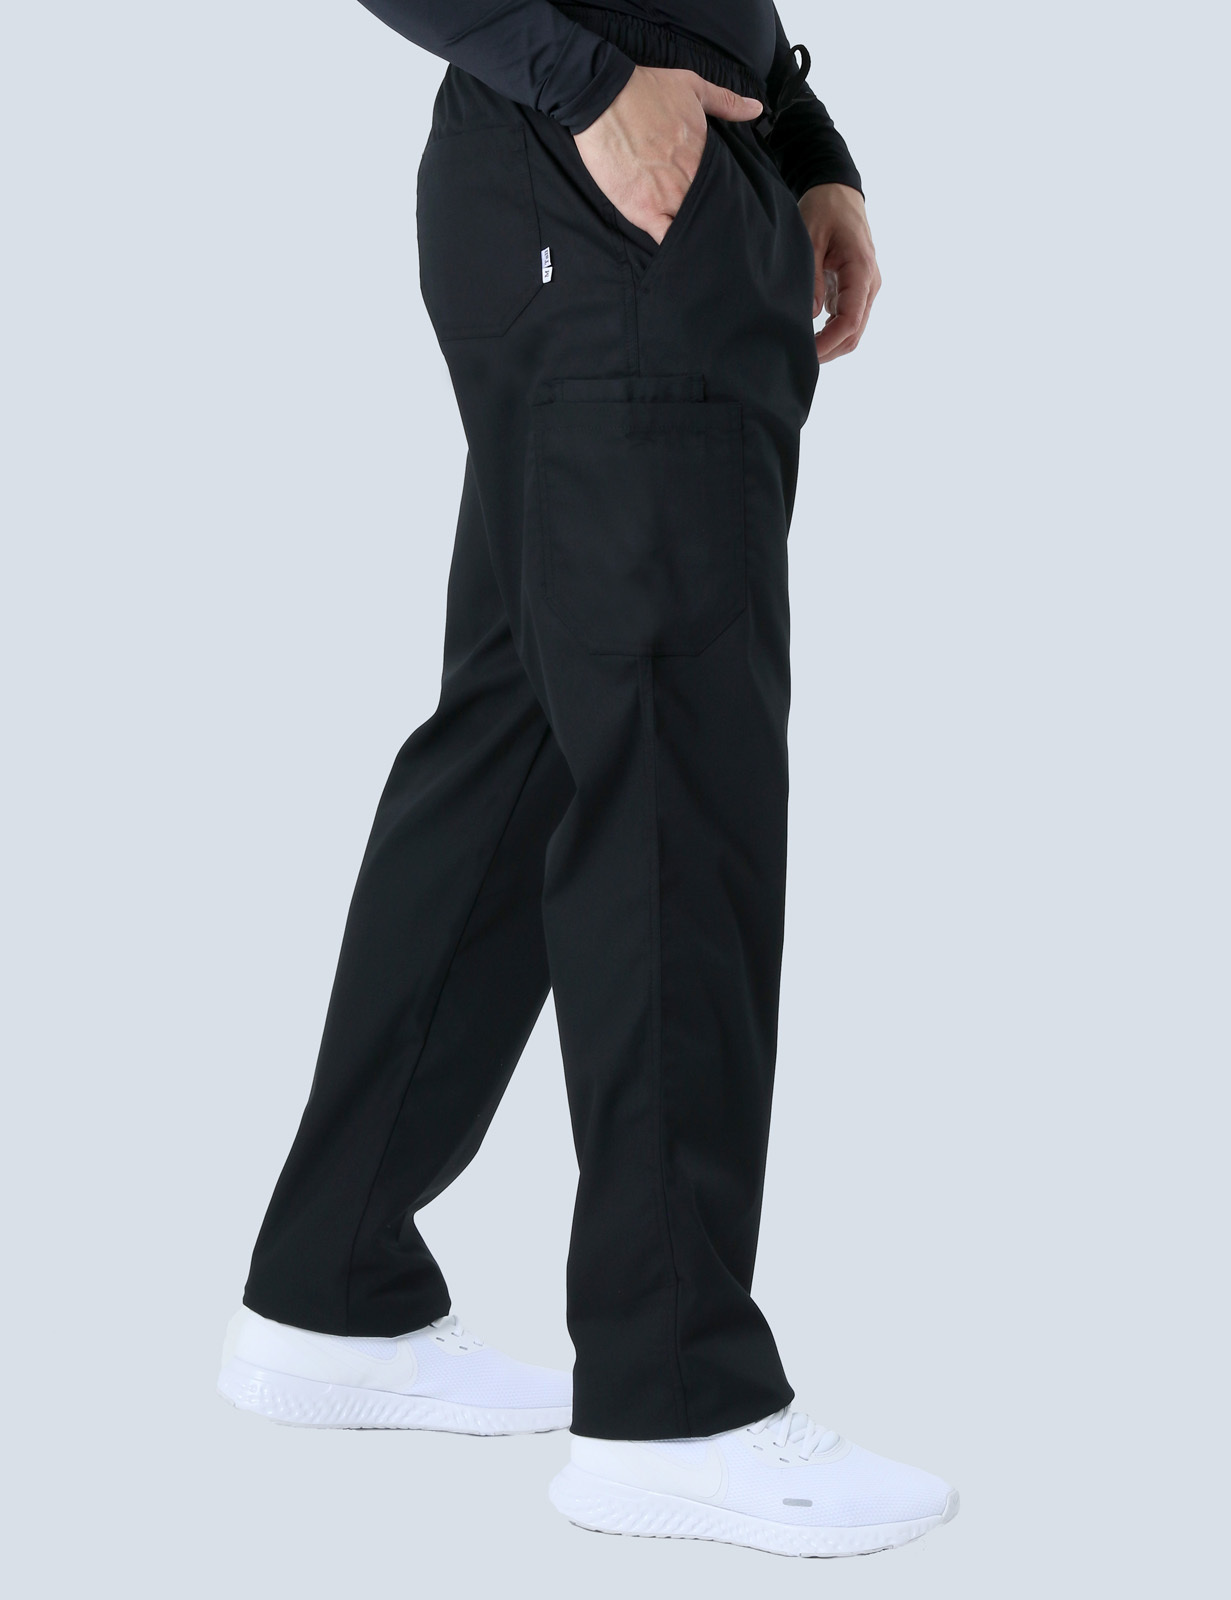 Men's Cargo Performance Pants - Black - 3X Large - 1